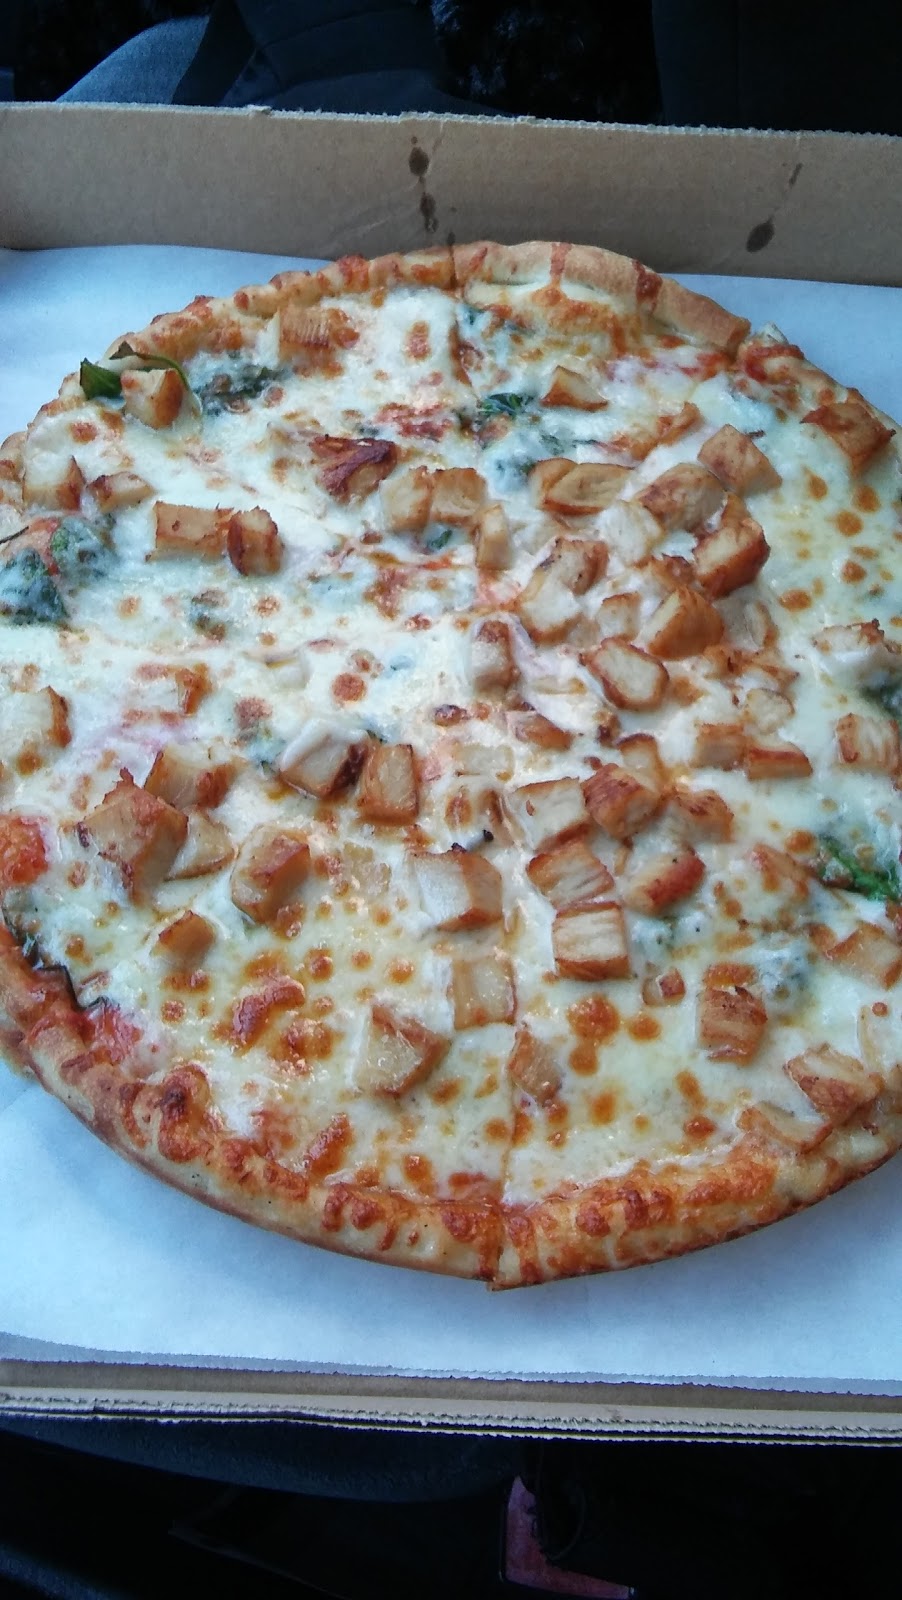 Seasons Pizza | 1524 Philadelphia Pike, Wilmington, DE 19809 | Phone: (302) 793-0505